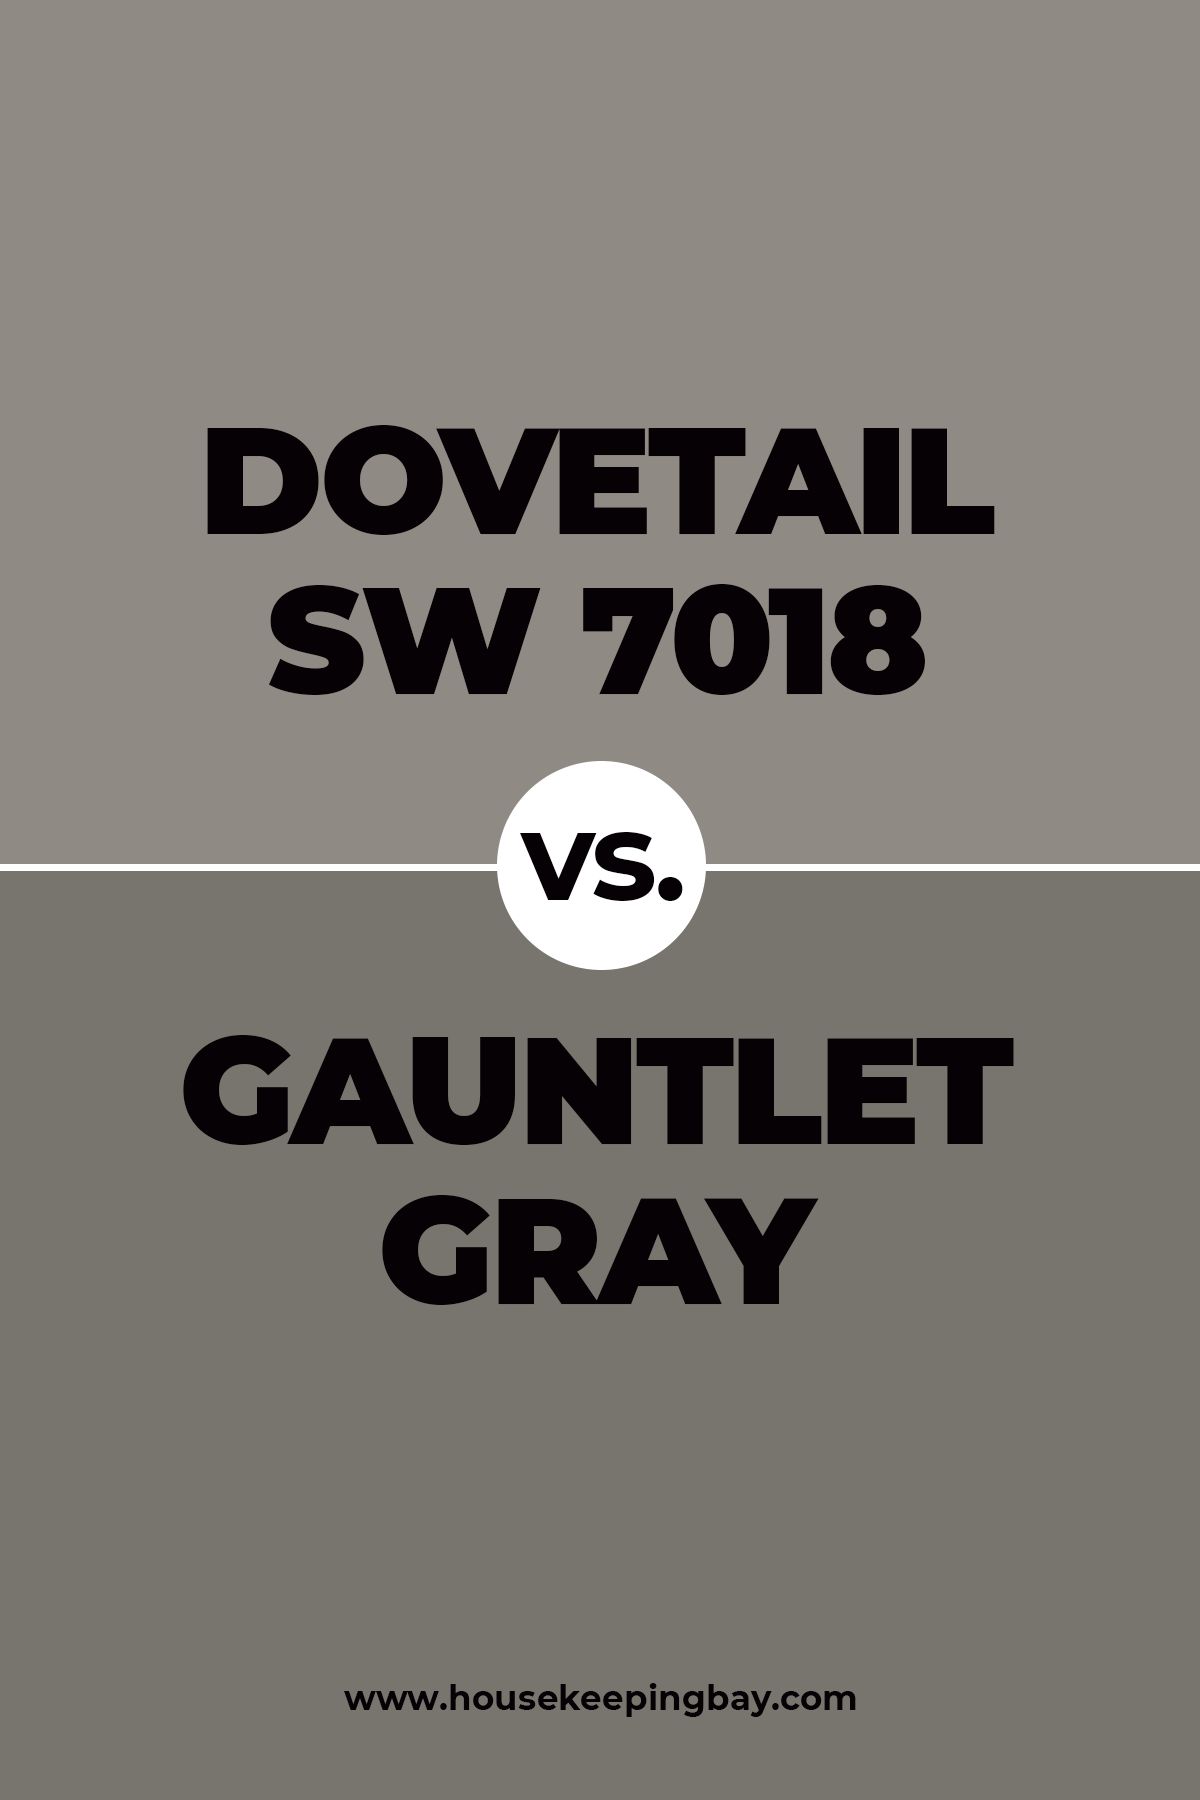 Dovetail vs Gauntlet gray